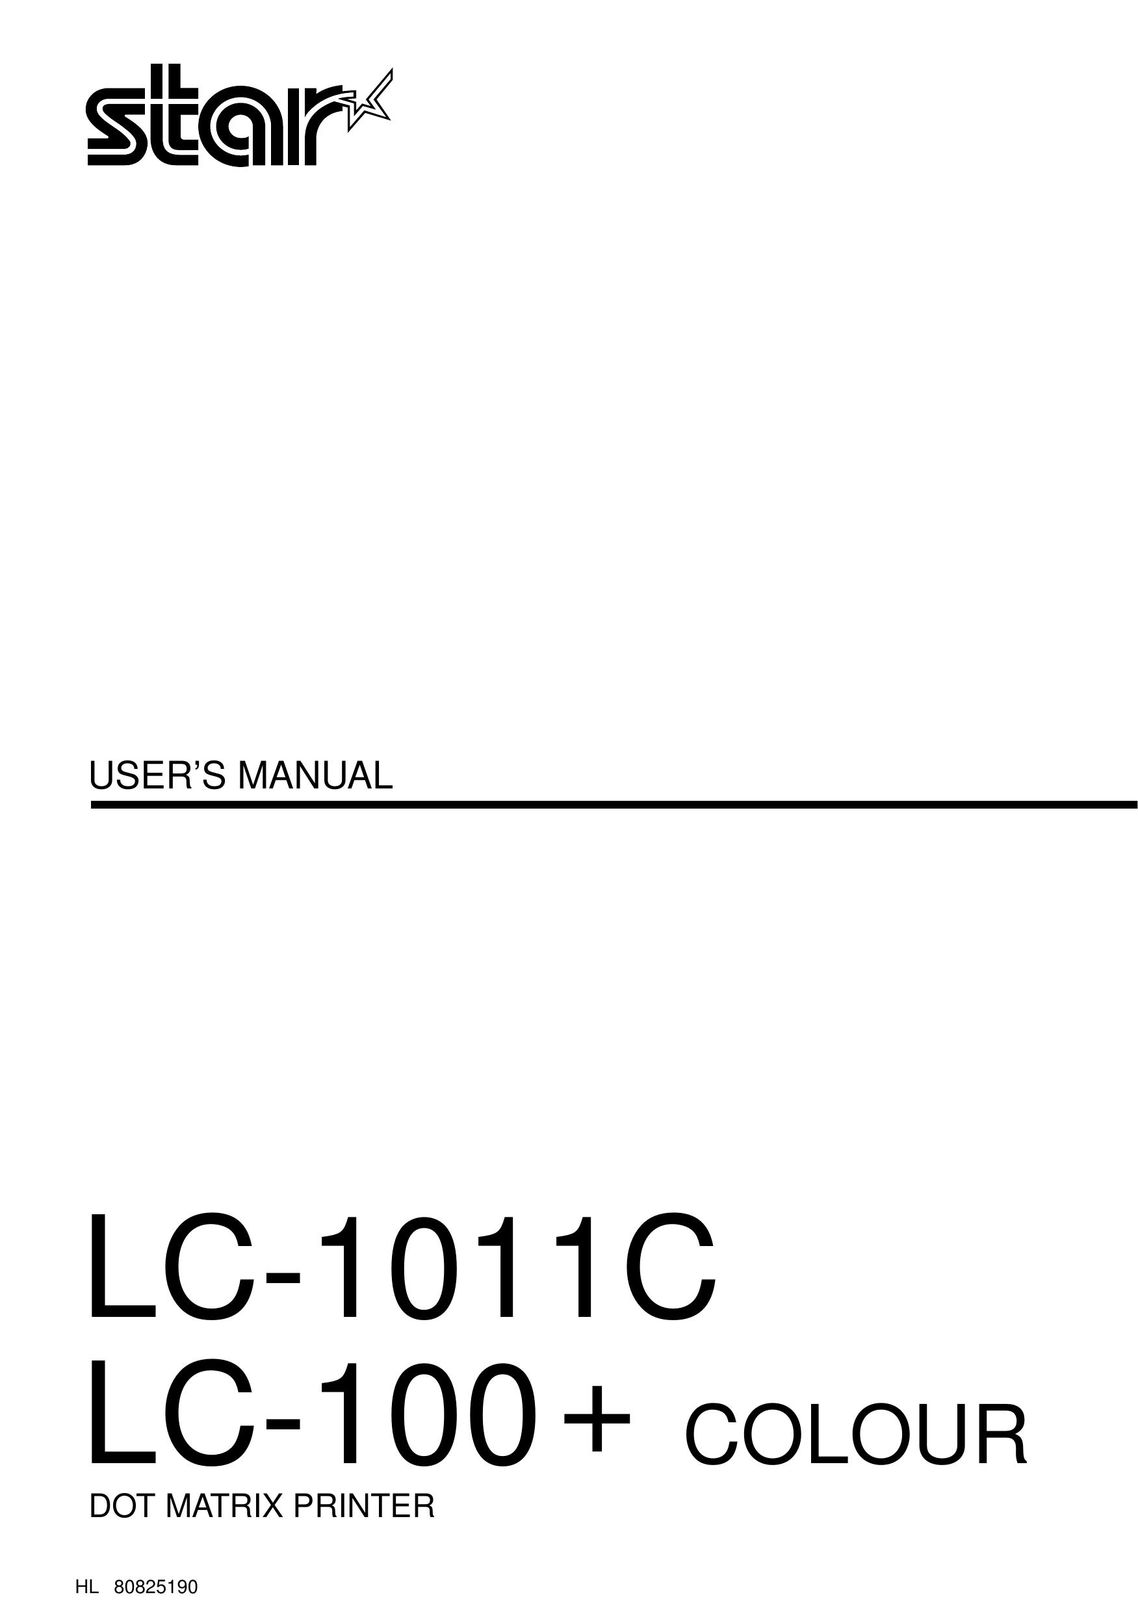 Star Micronics LC-100+ Printer User Manual